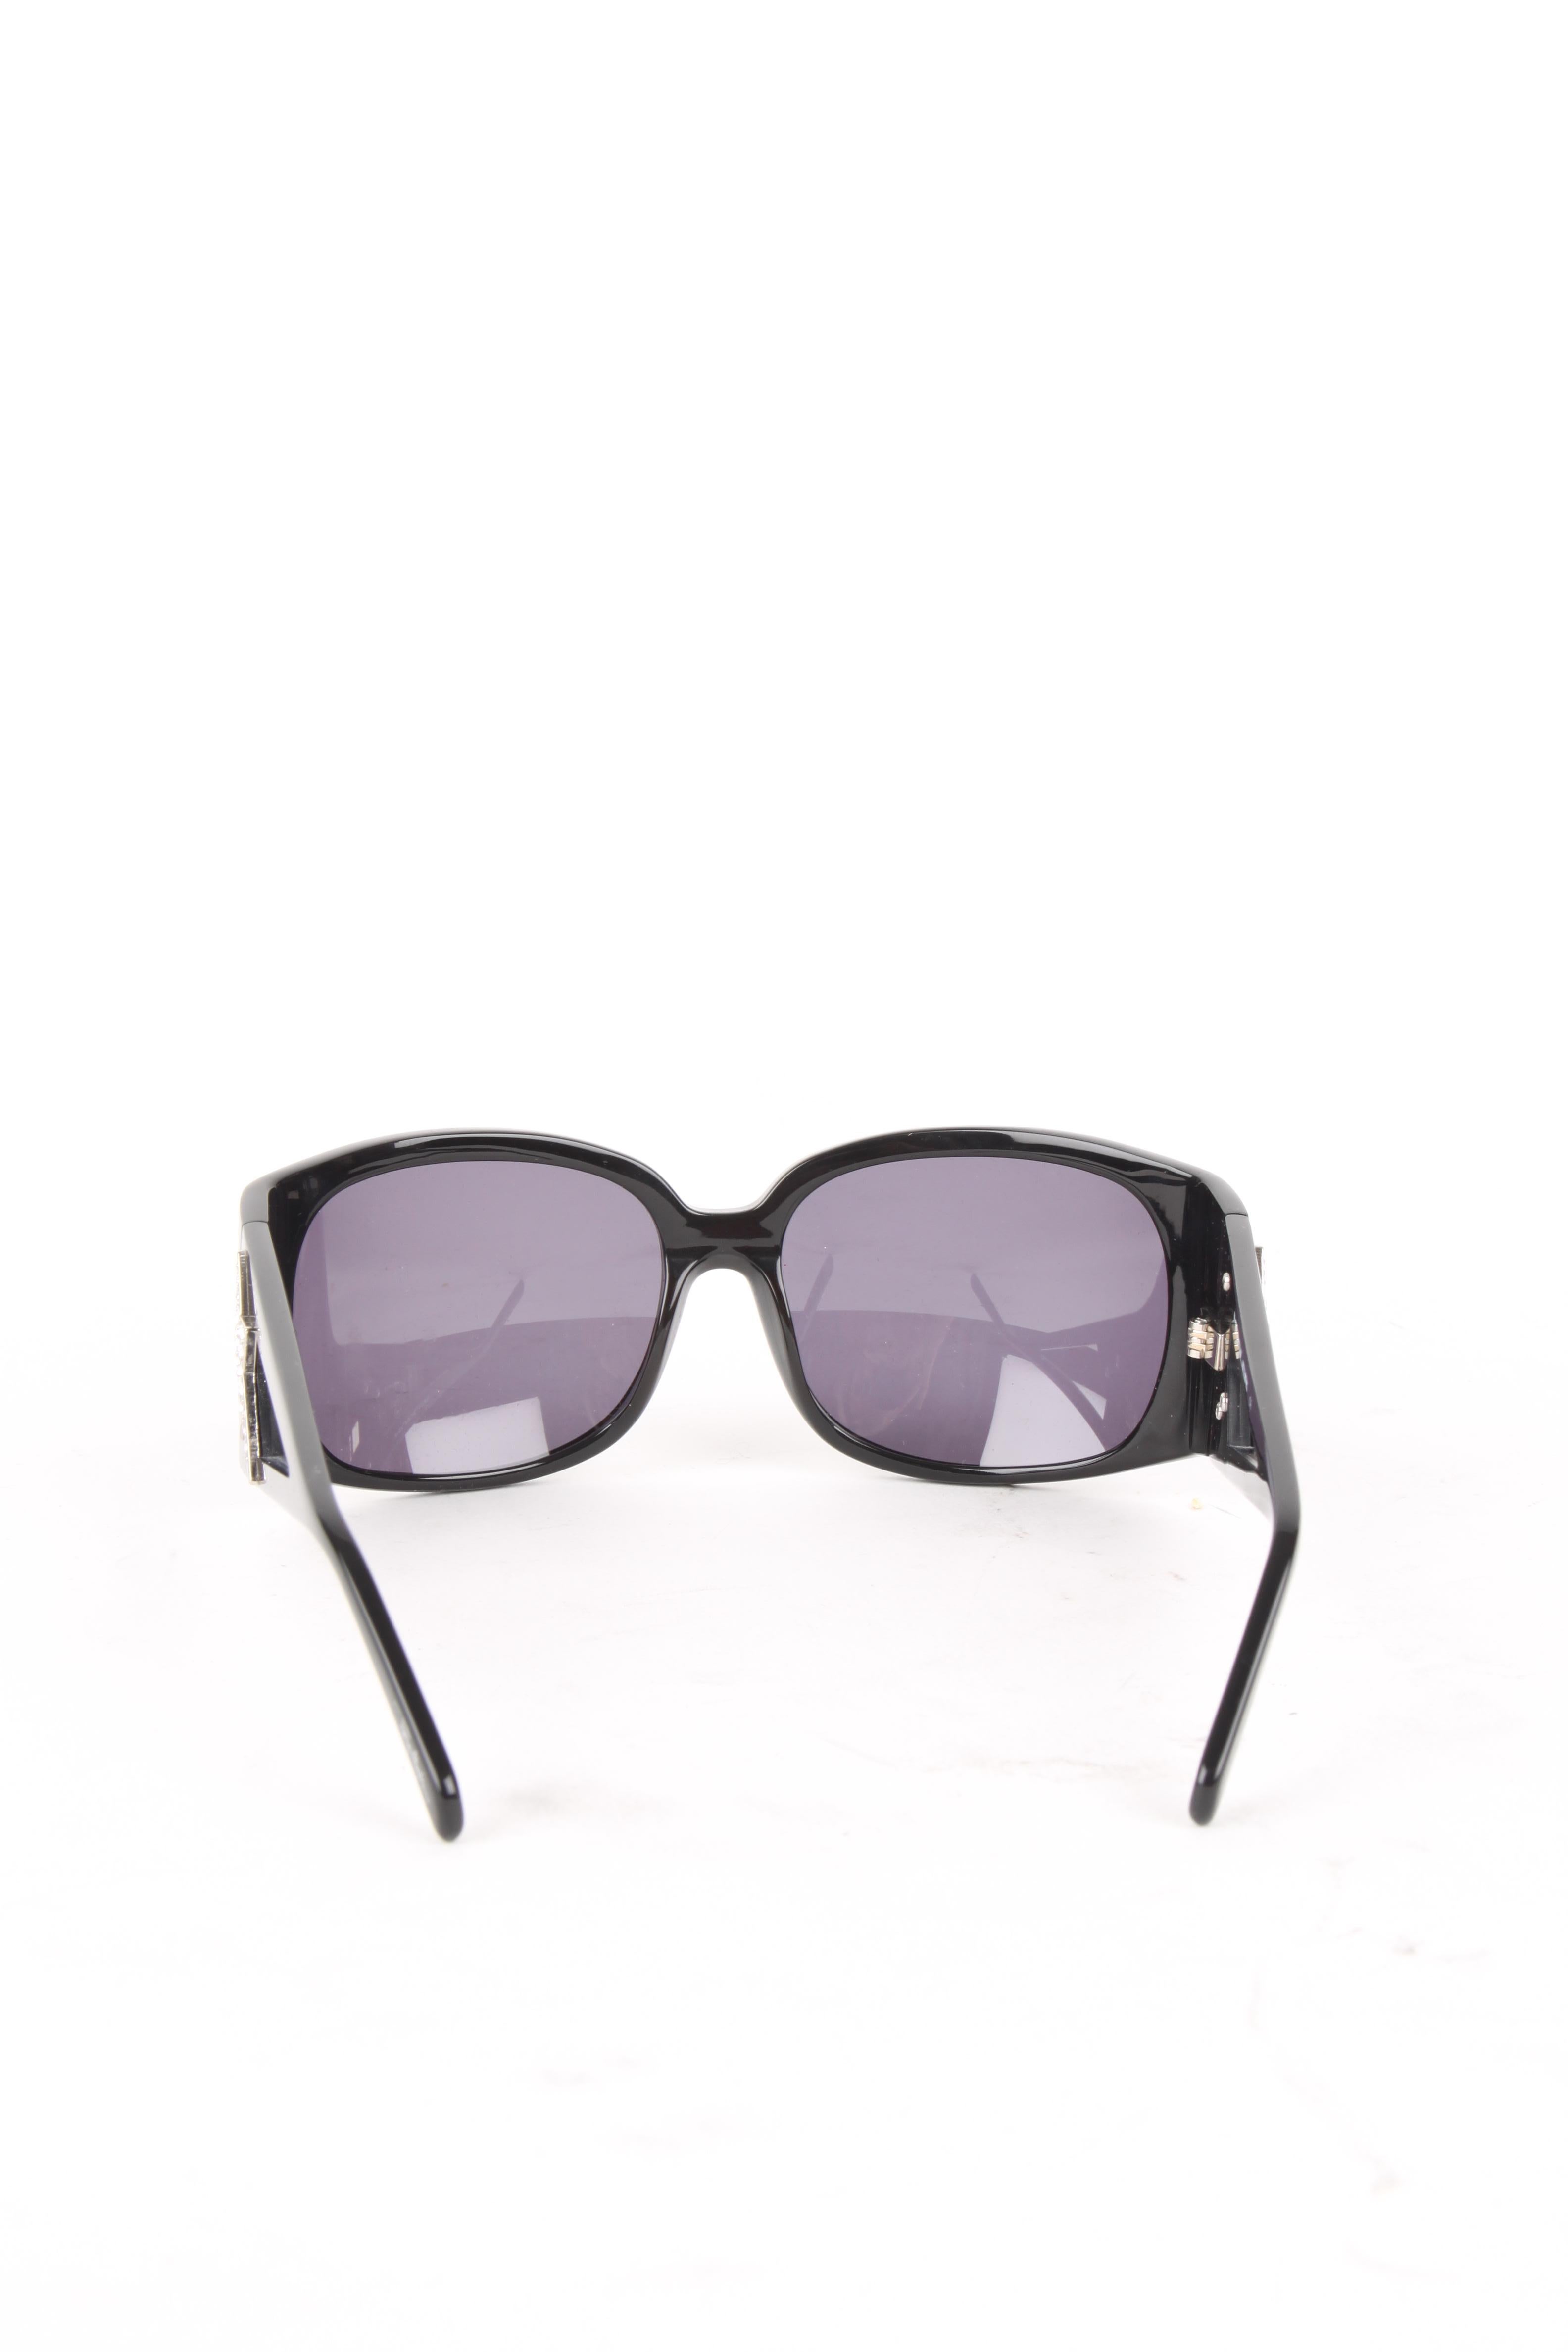 Thierry Mugler Black Lucite Star Swarovski Rhinestone Embellished Sunglasses For Sale 2